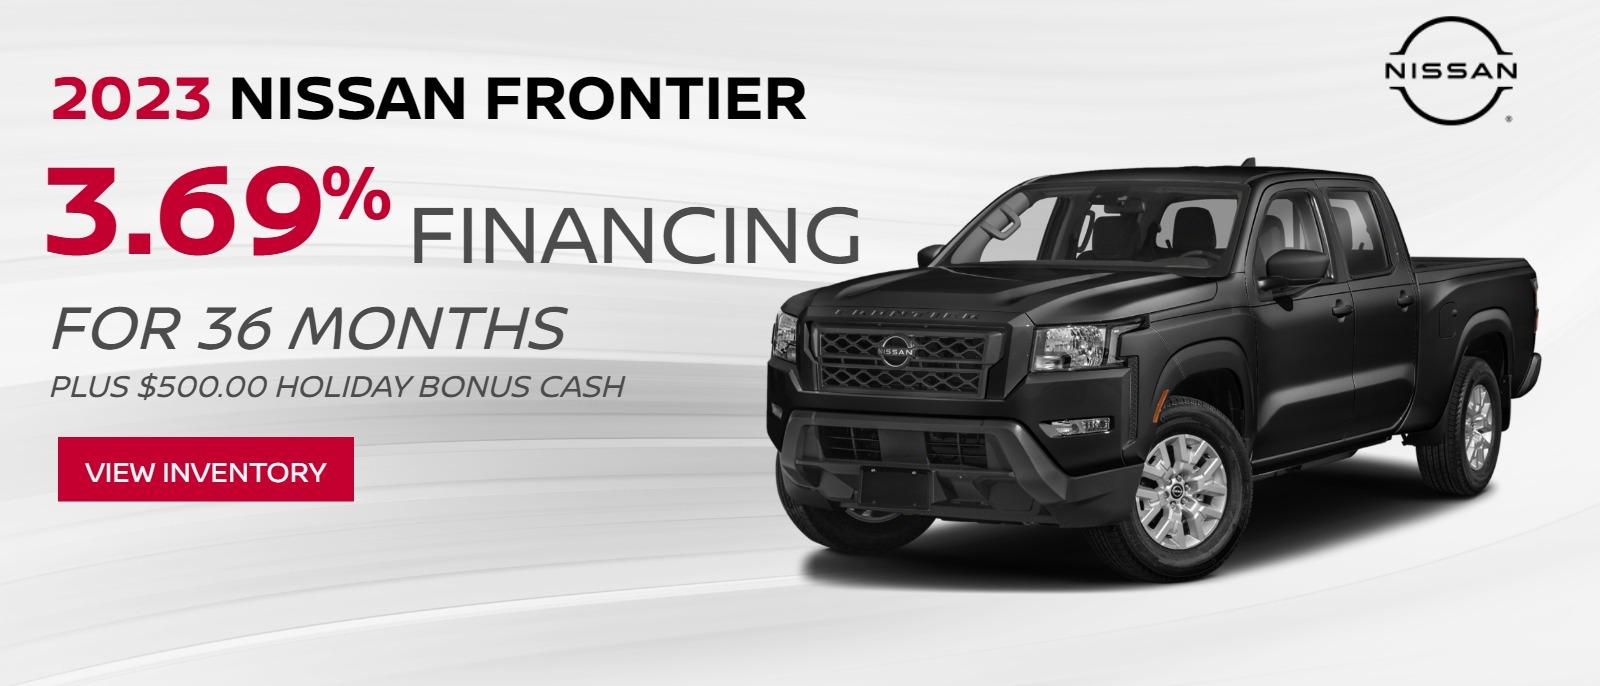 2023 Frontier, 2.99% financing 36 months